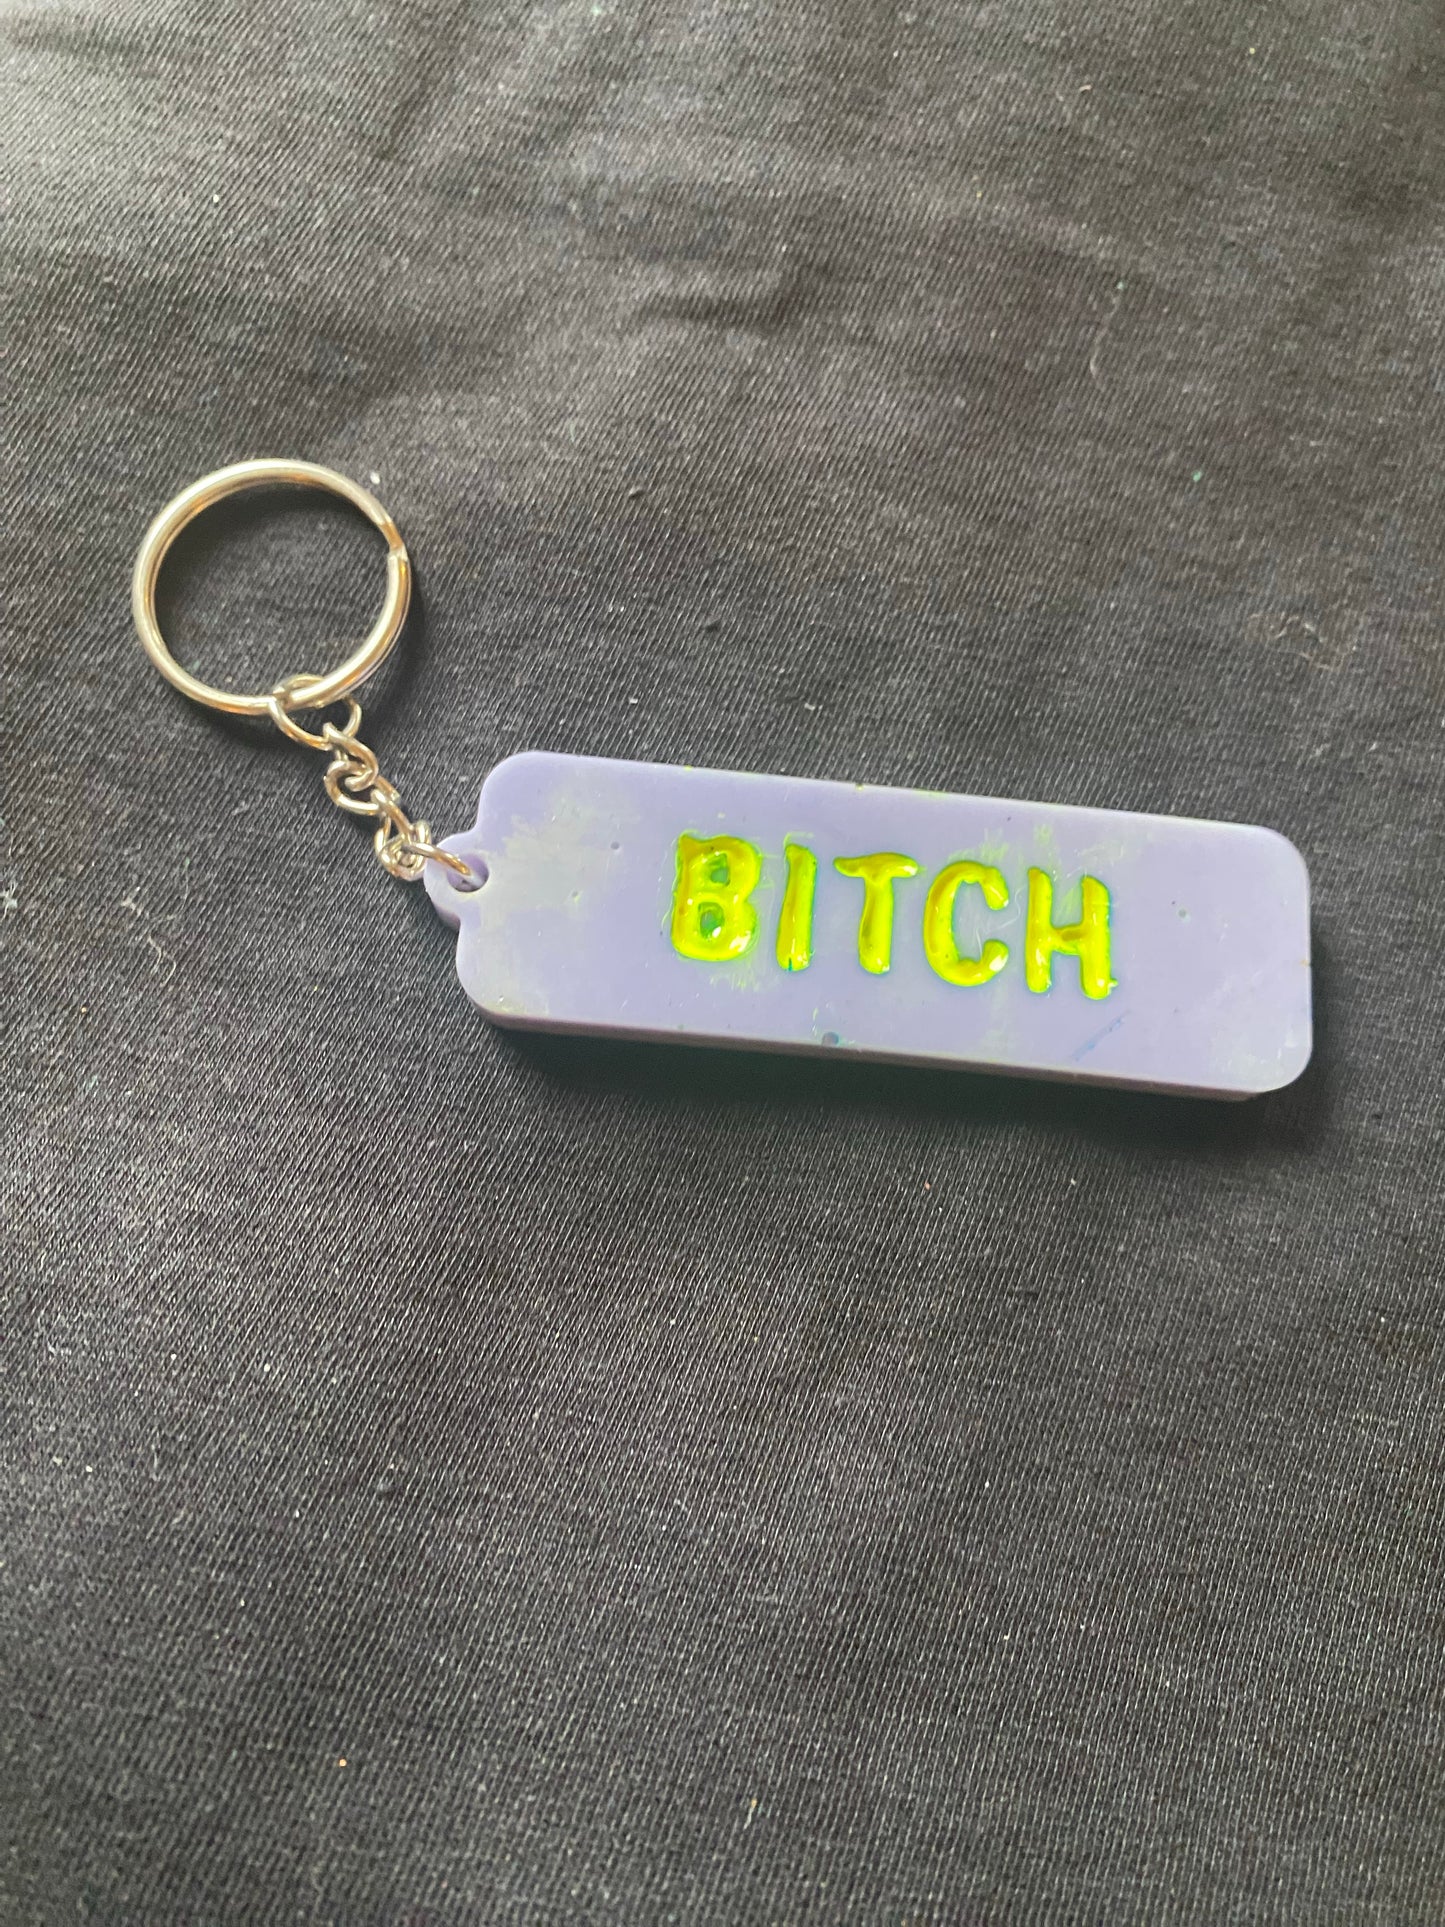 Sweary keychain/luggage tag